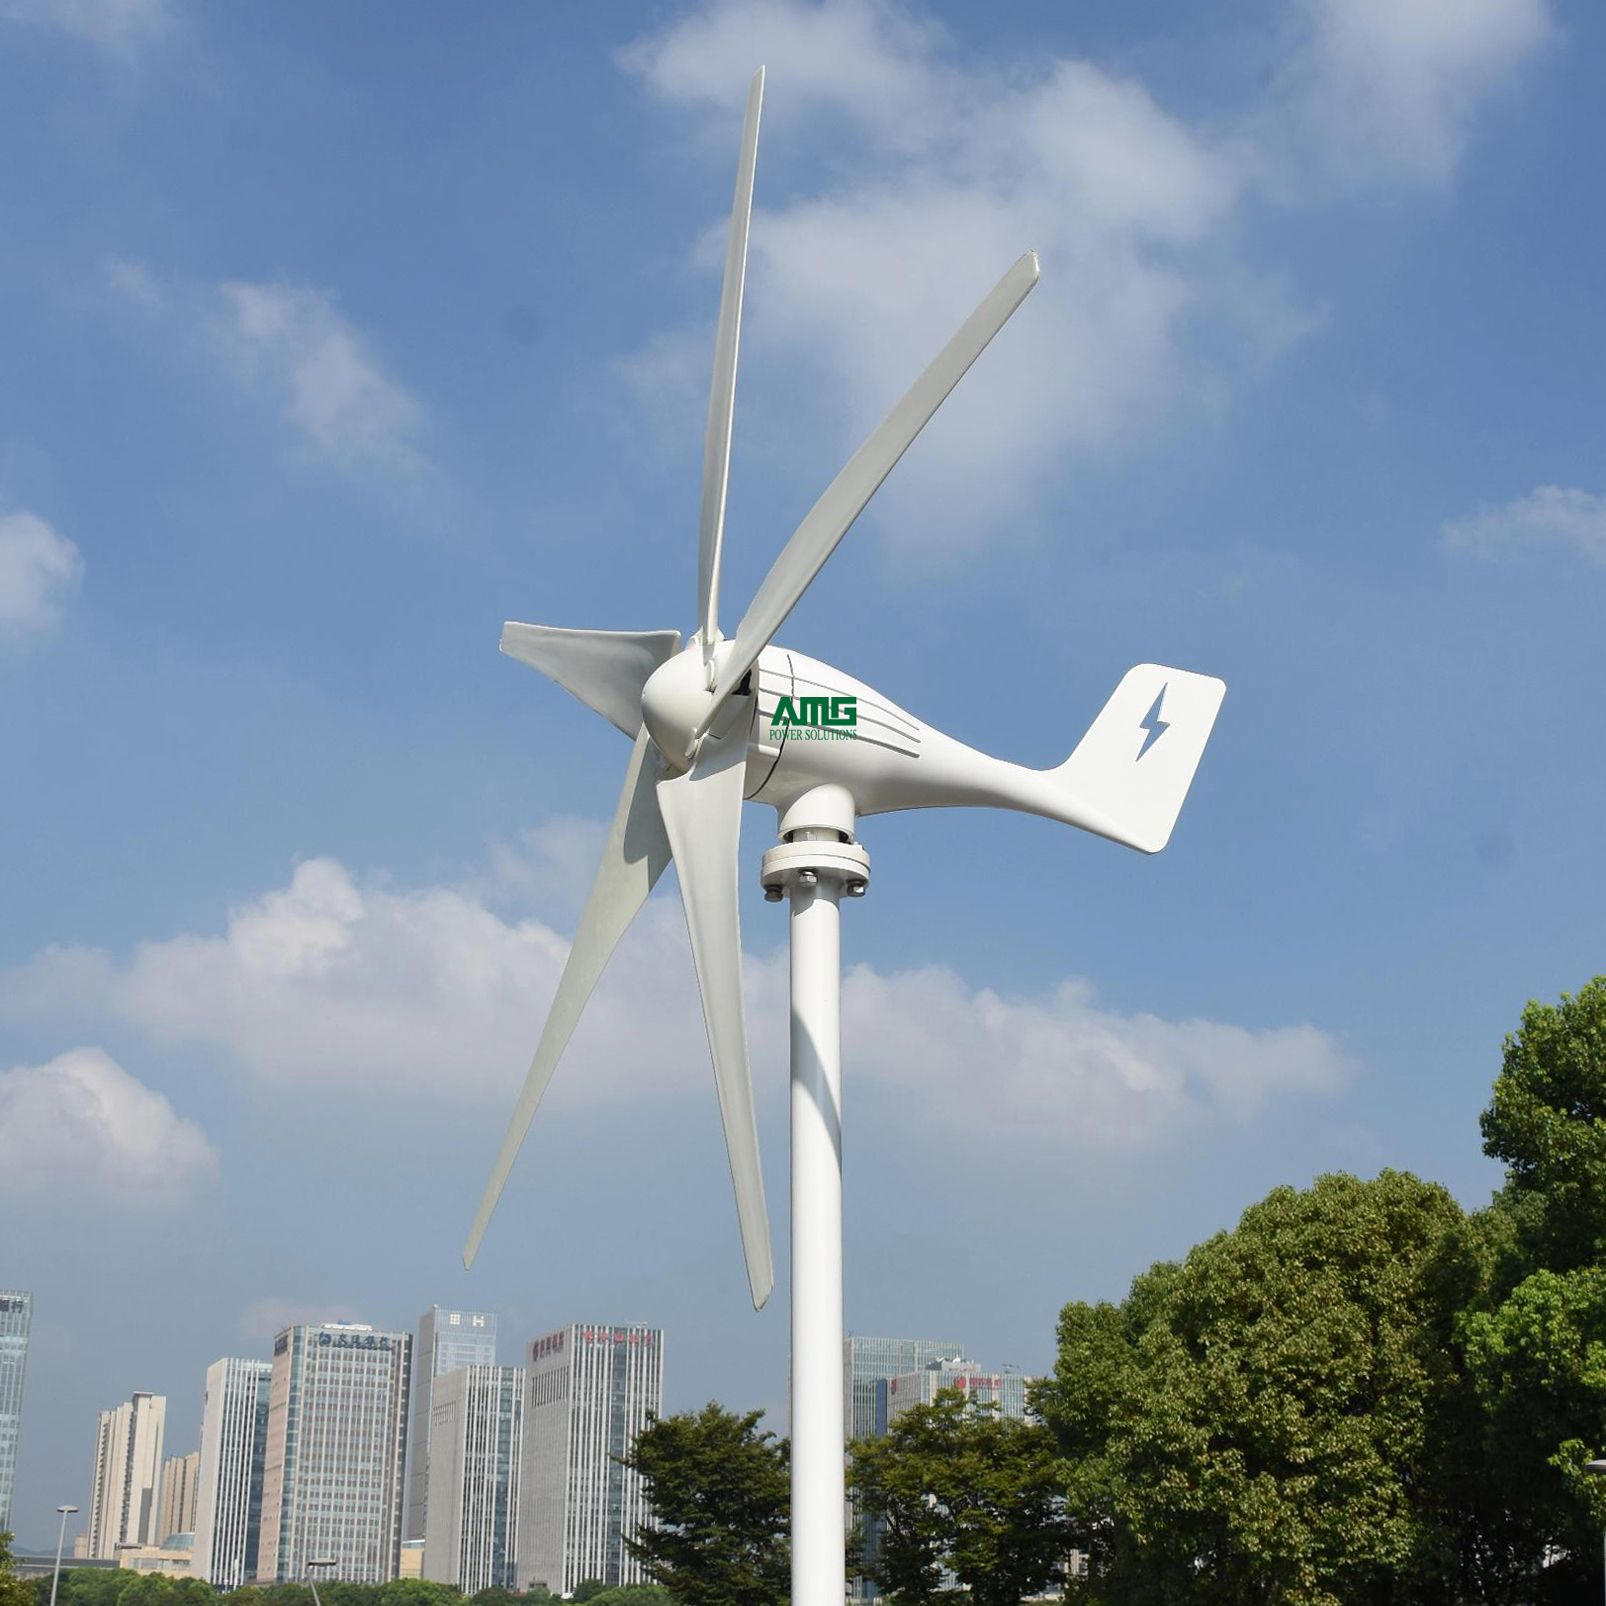 Home Wind Turbine Kits Uk | Review Home Co